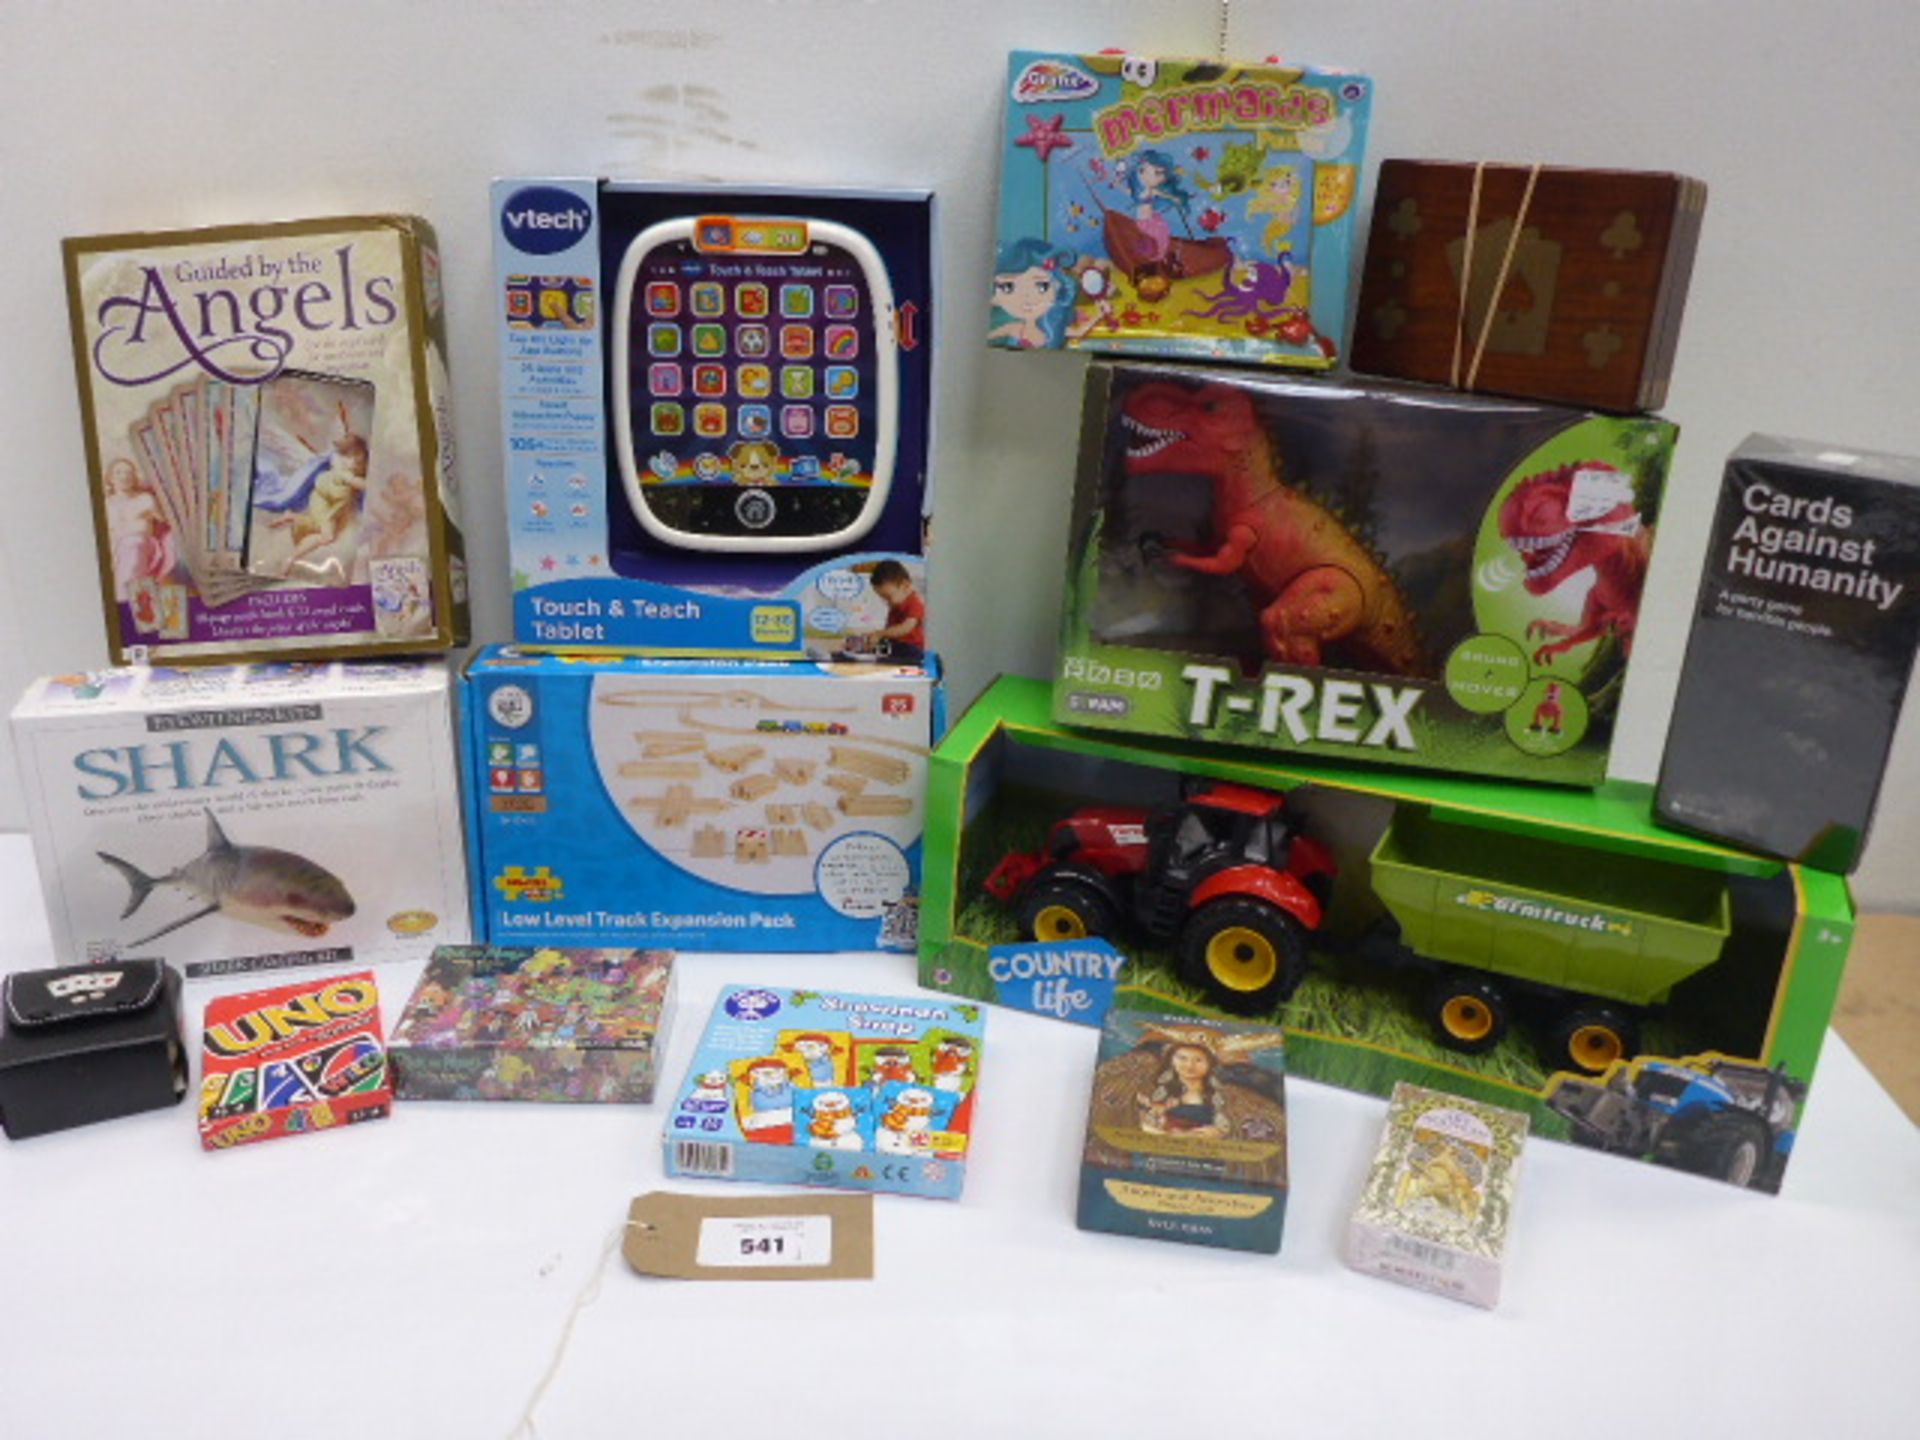 15 toys & games including Shark casting kit, Vtech tablet, Robo T-Rex, Country Life Track & trailer,